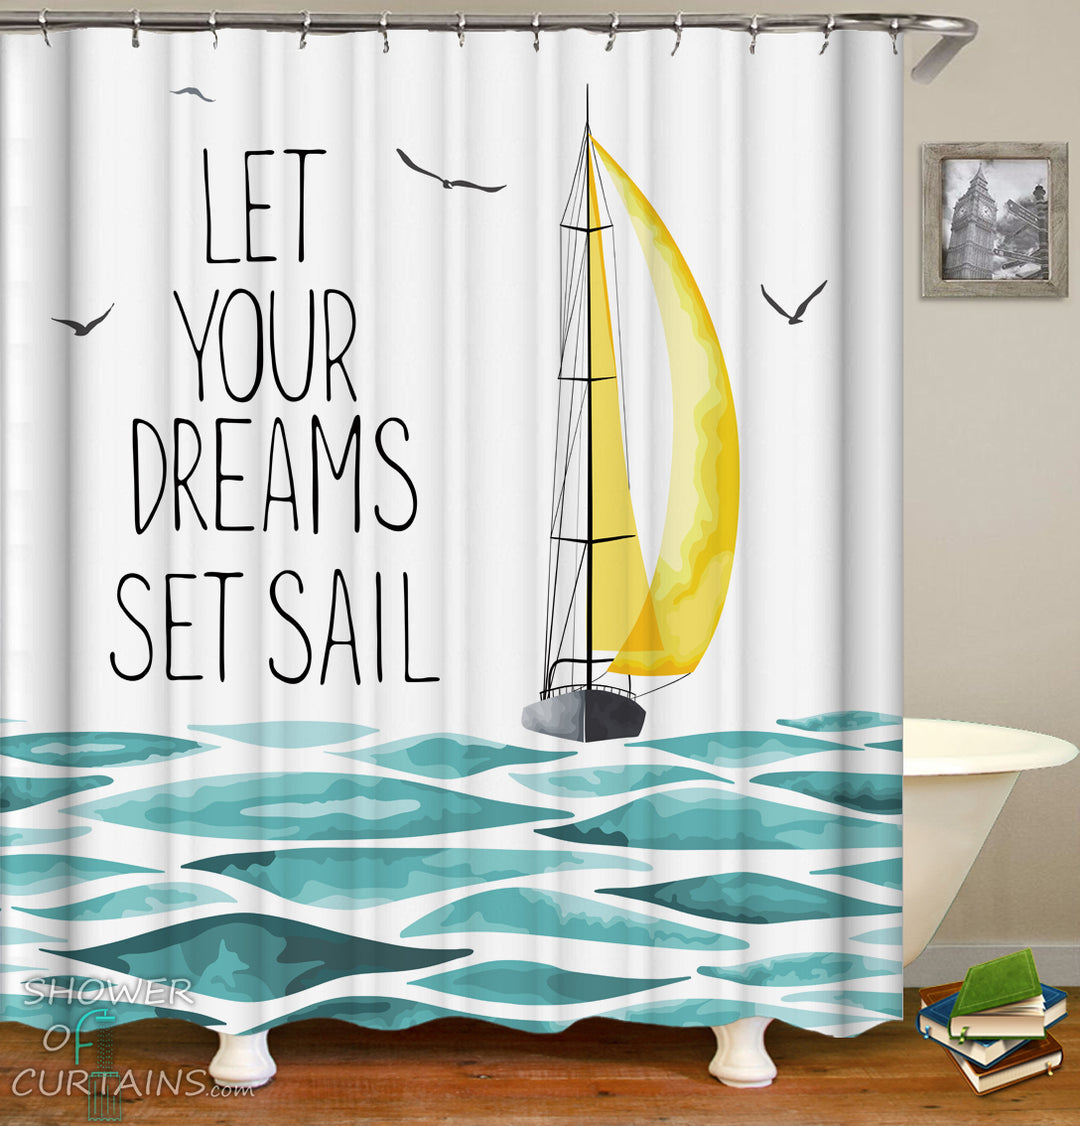 Inspirational Shower Curtain - Let Your Dreams Set Sail